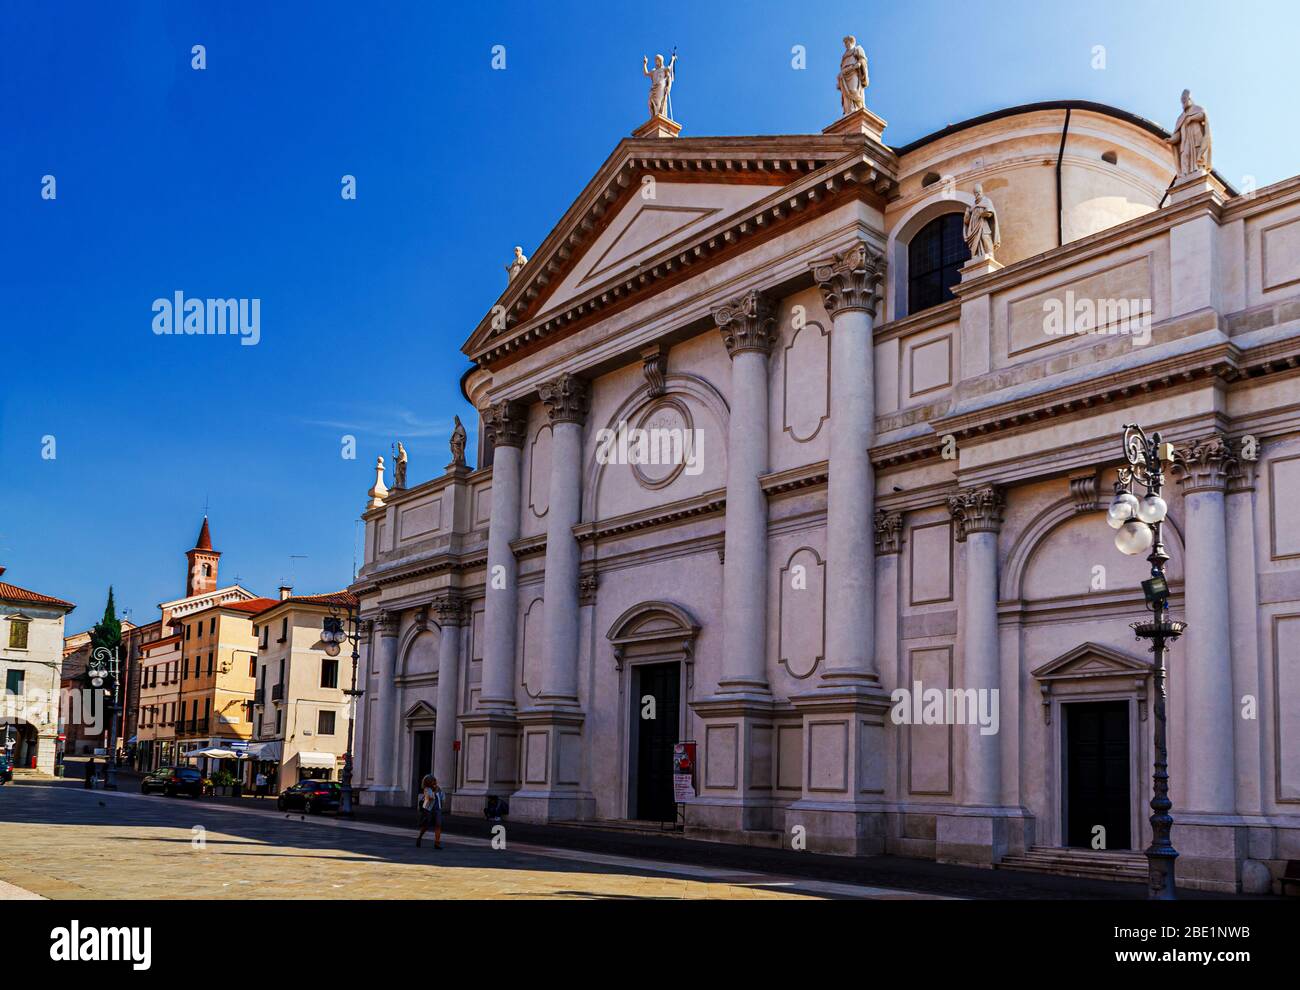 Bassano del Grappa, Vicenza / Italy - October 2 2017: The church of Saint Giovanni (Saint John) the Baptist in Bassano del Grappa, Vicenza, Italy. Stock Photo